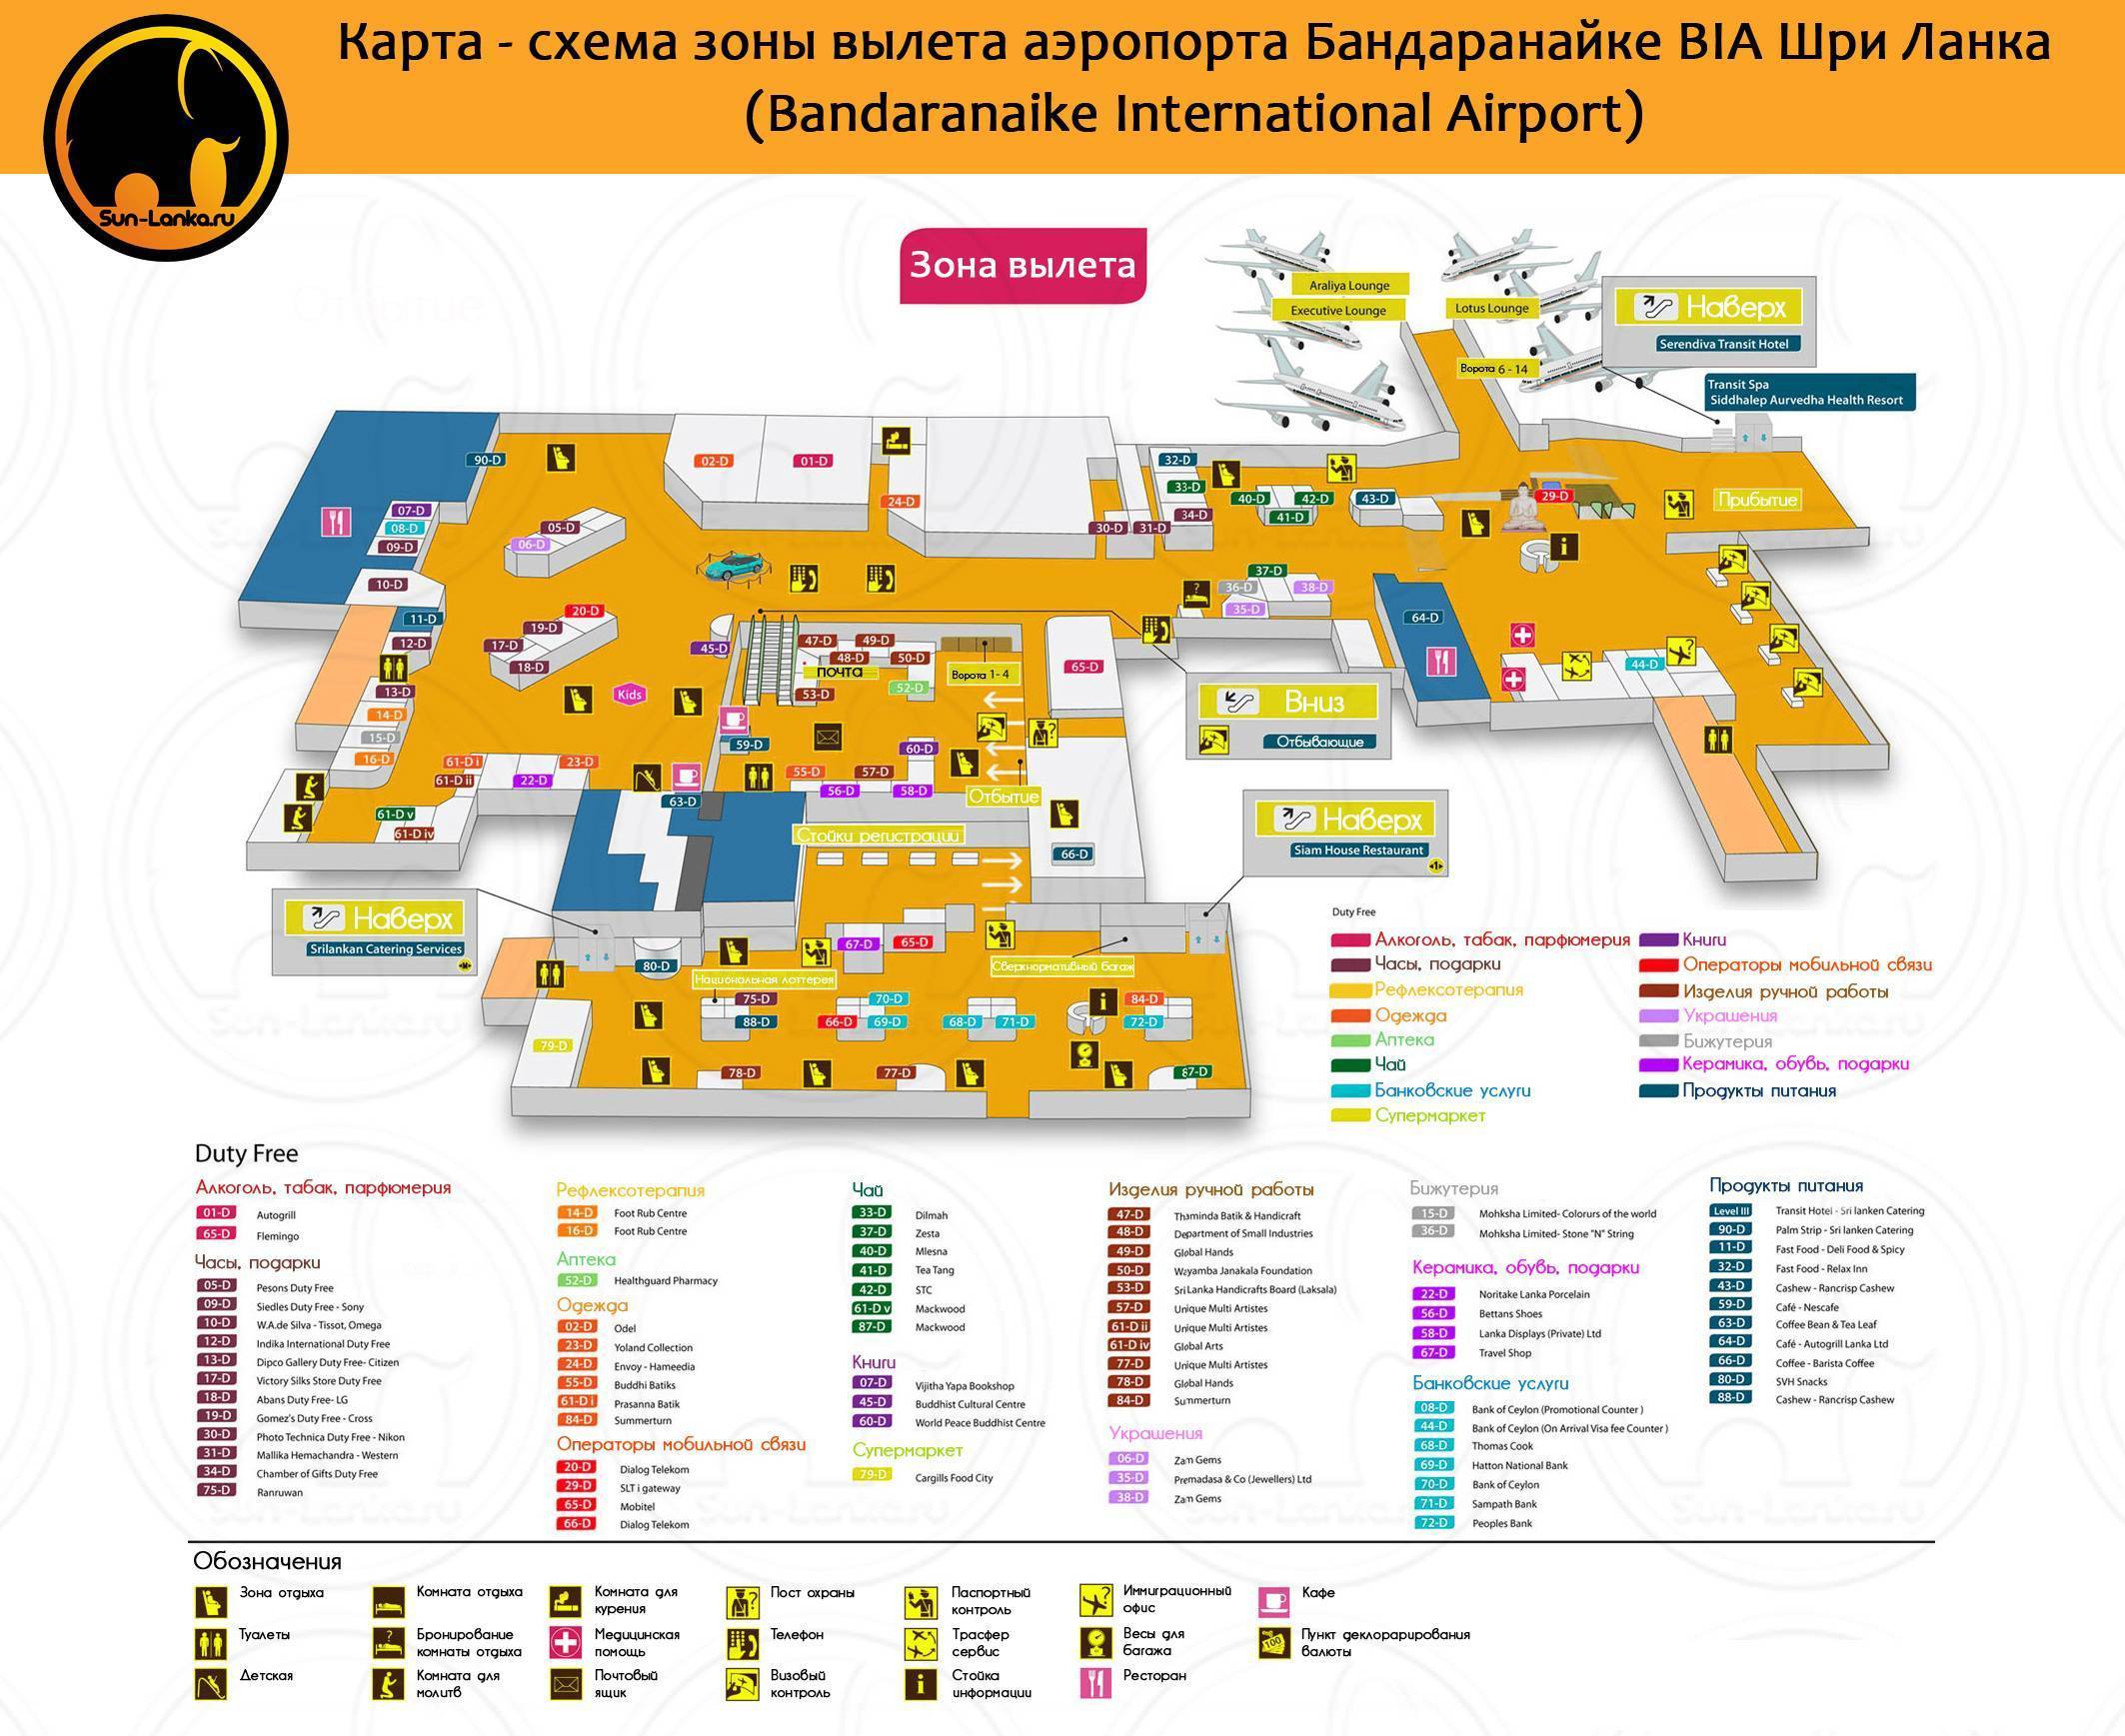 Международный аэропорт шри-ланки, bandaranaike international airport, airport colombo